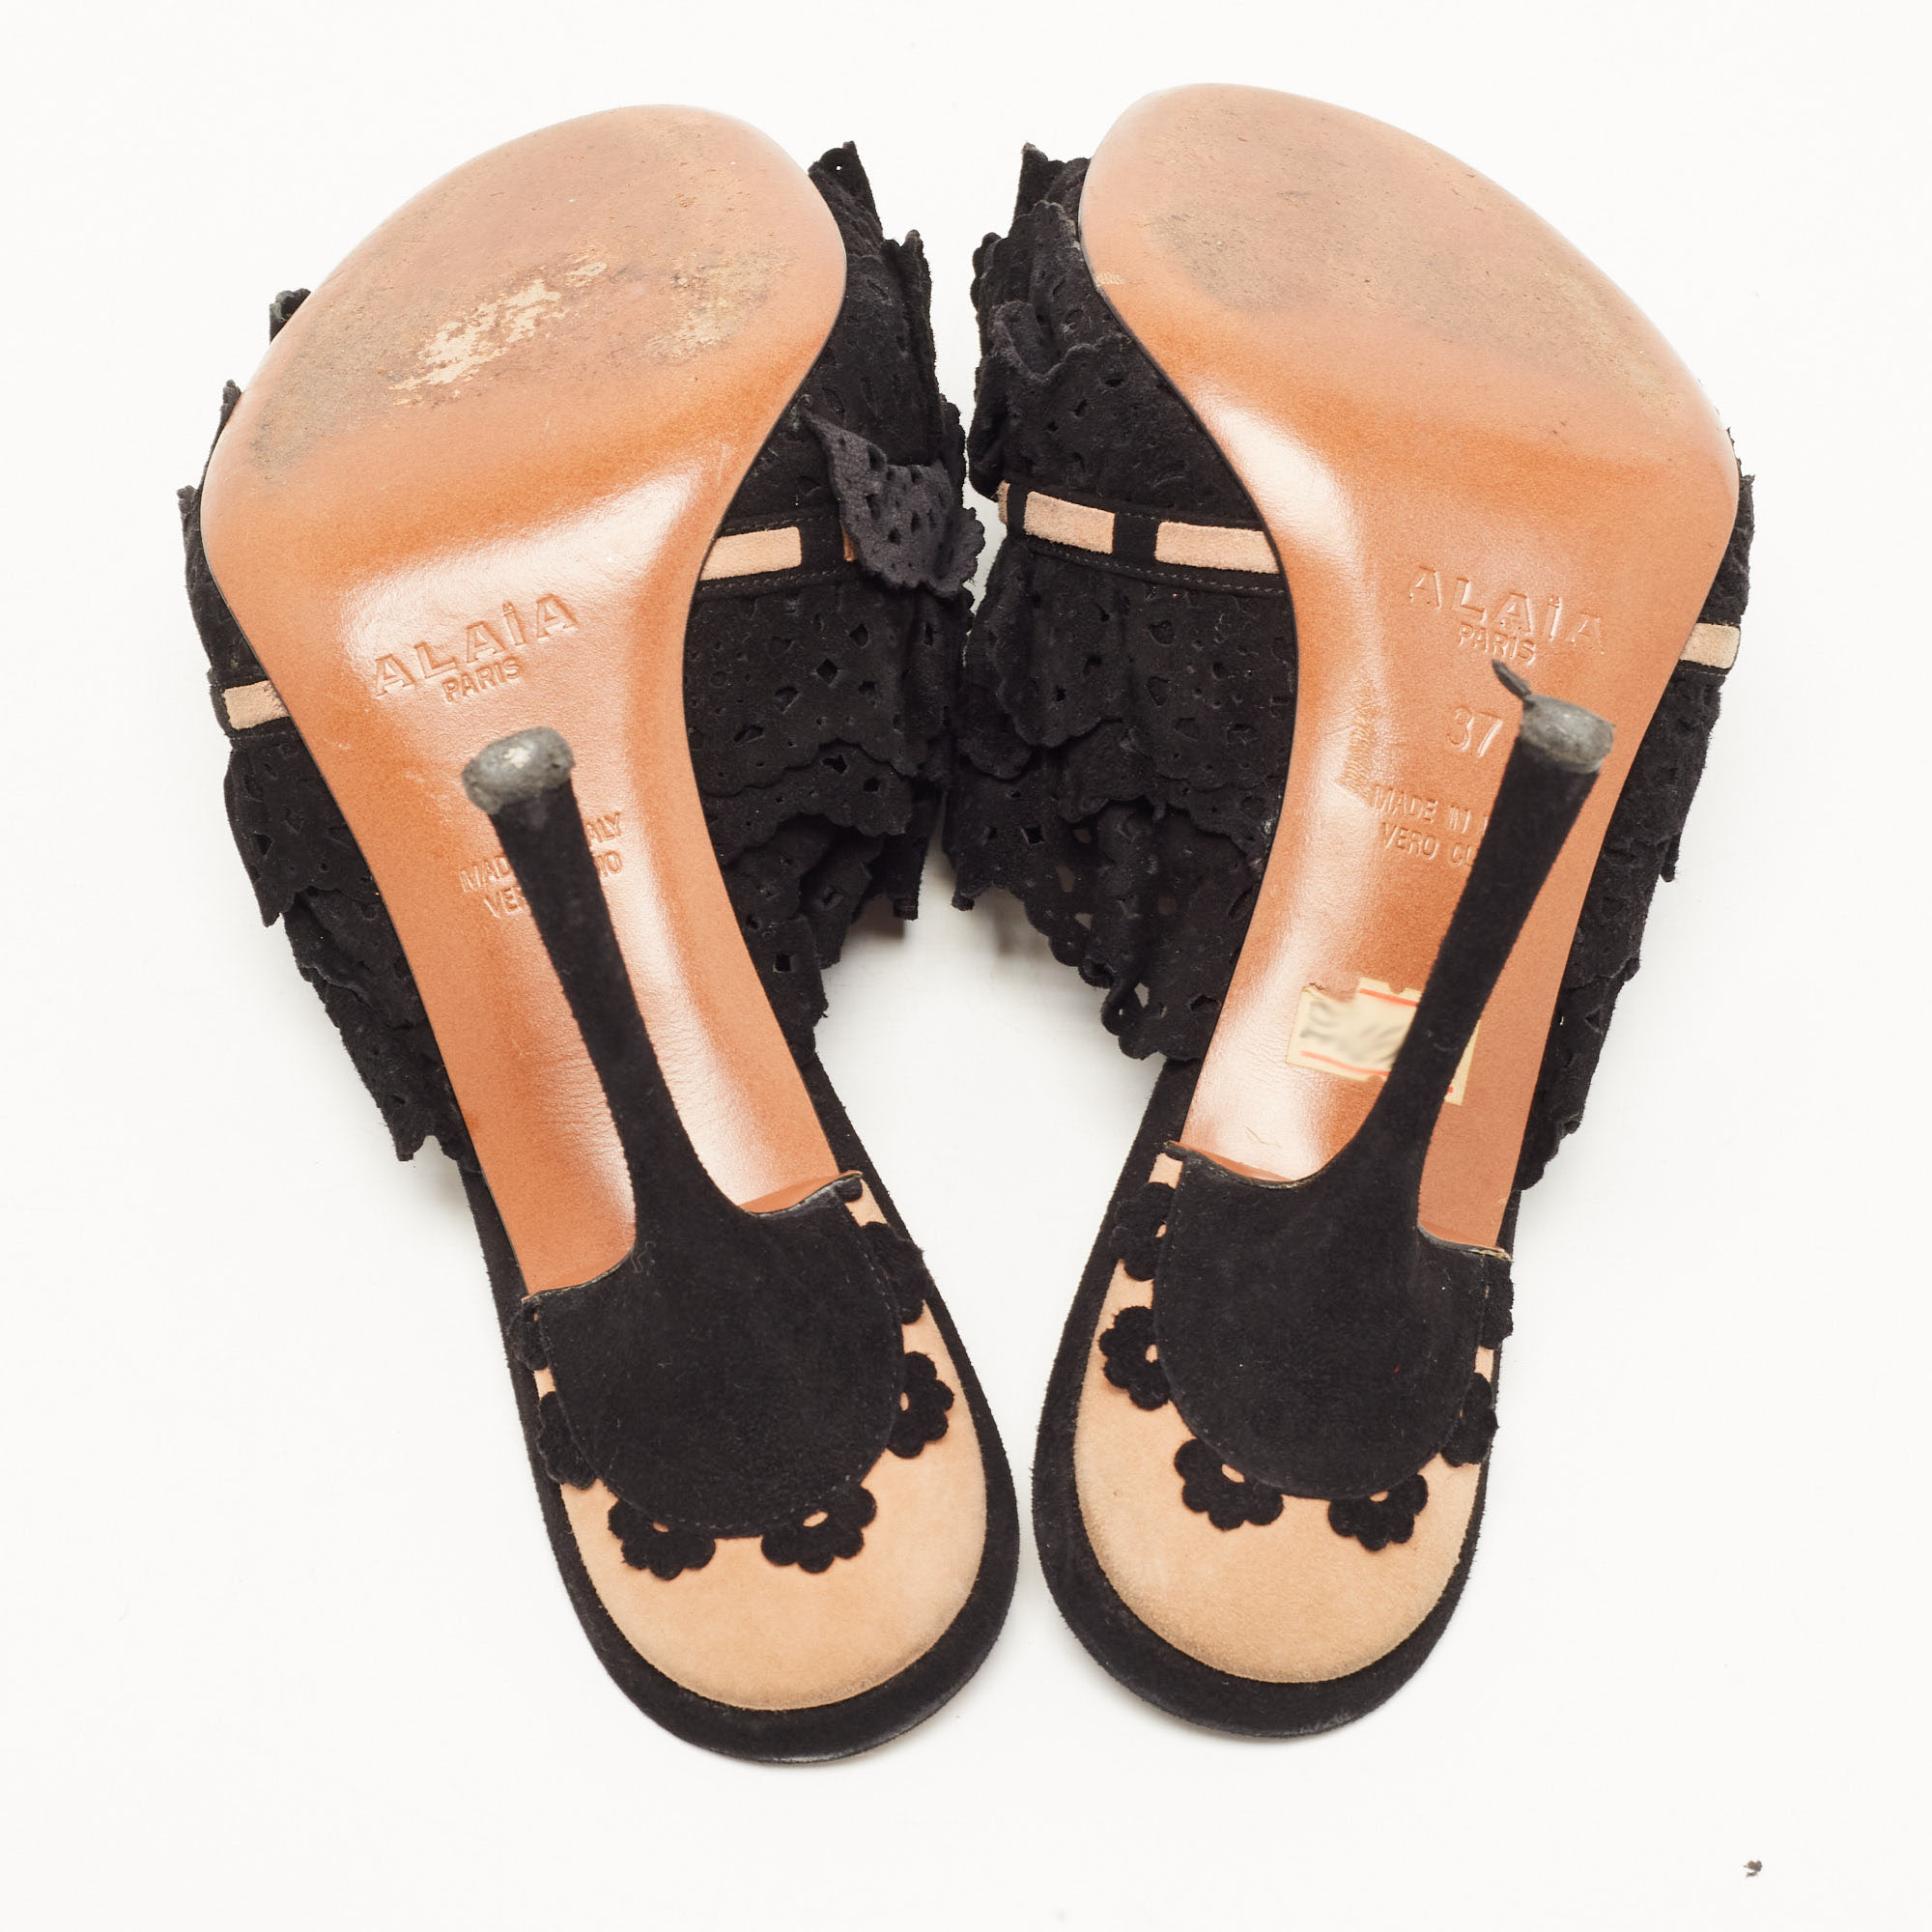 Alaia Black/Beige Suede Slip On Sandals Size 37